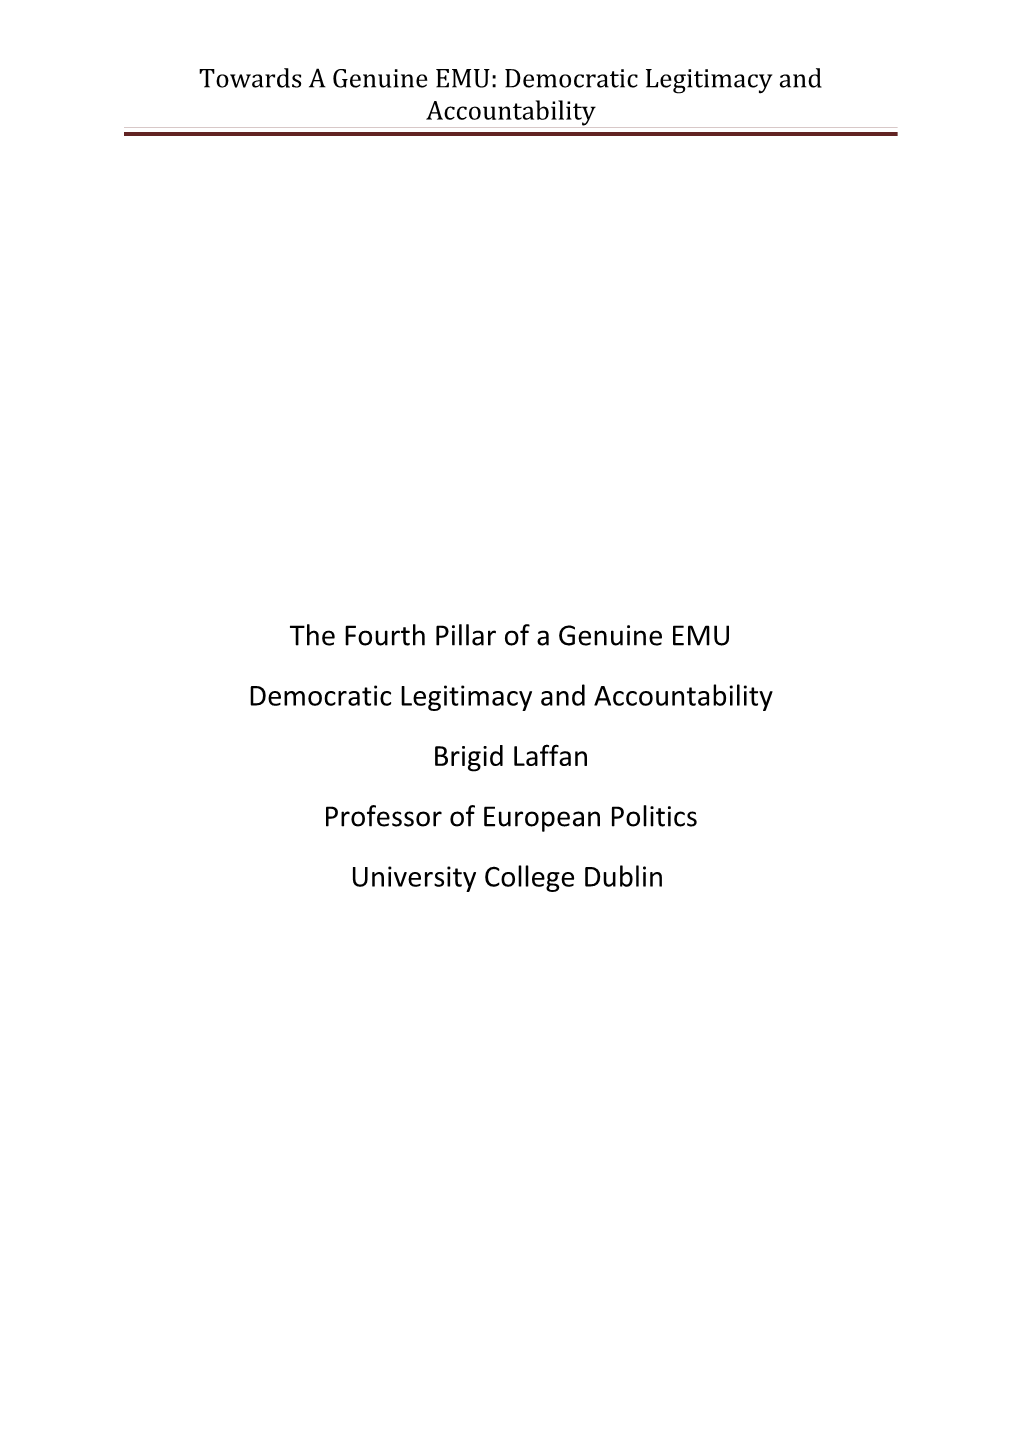 Towards a Genuine EMU: Democratic Legitimacy and Accountability